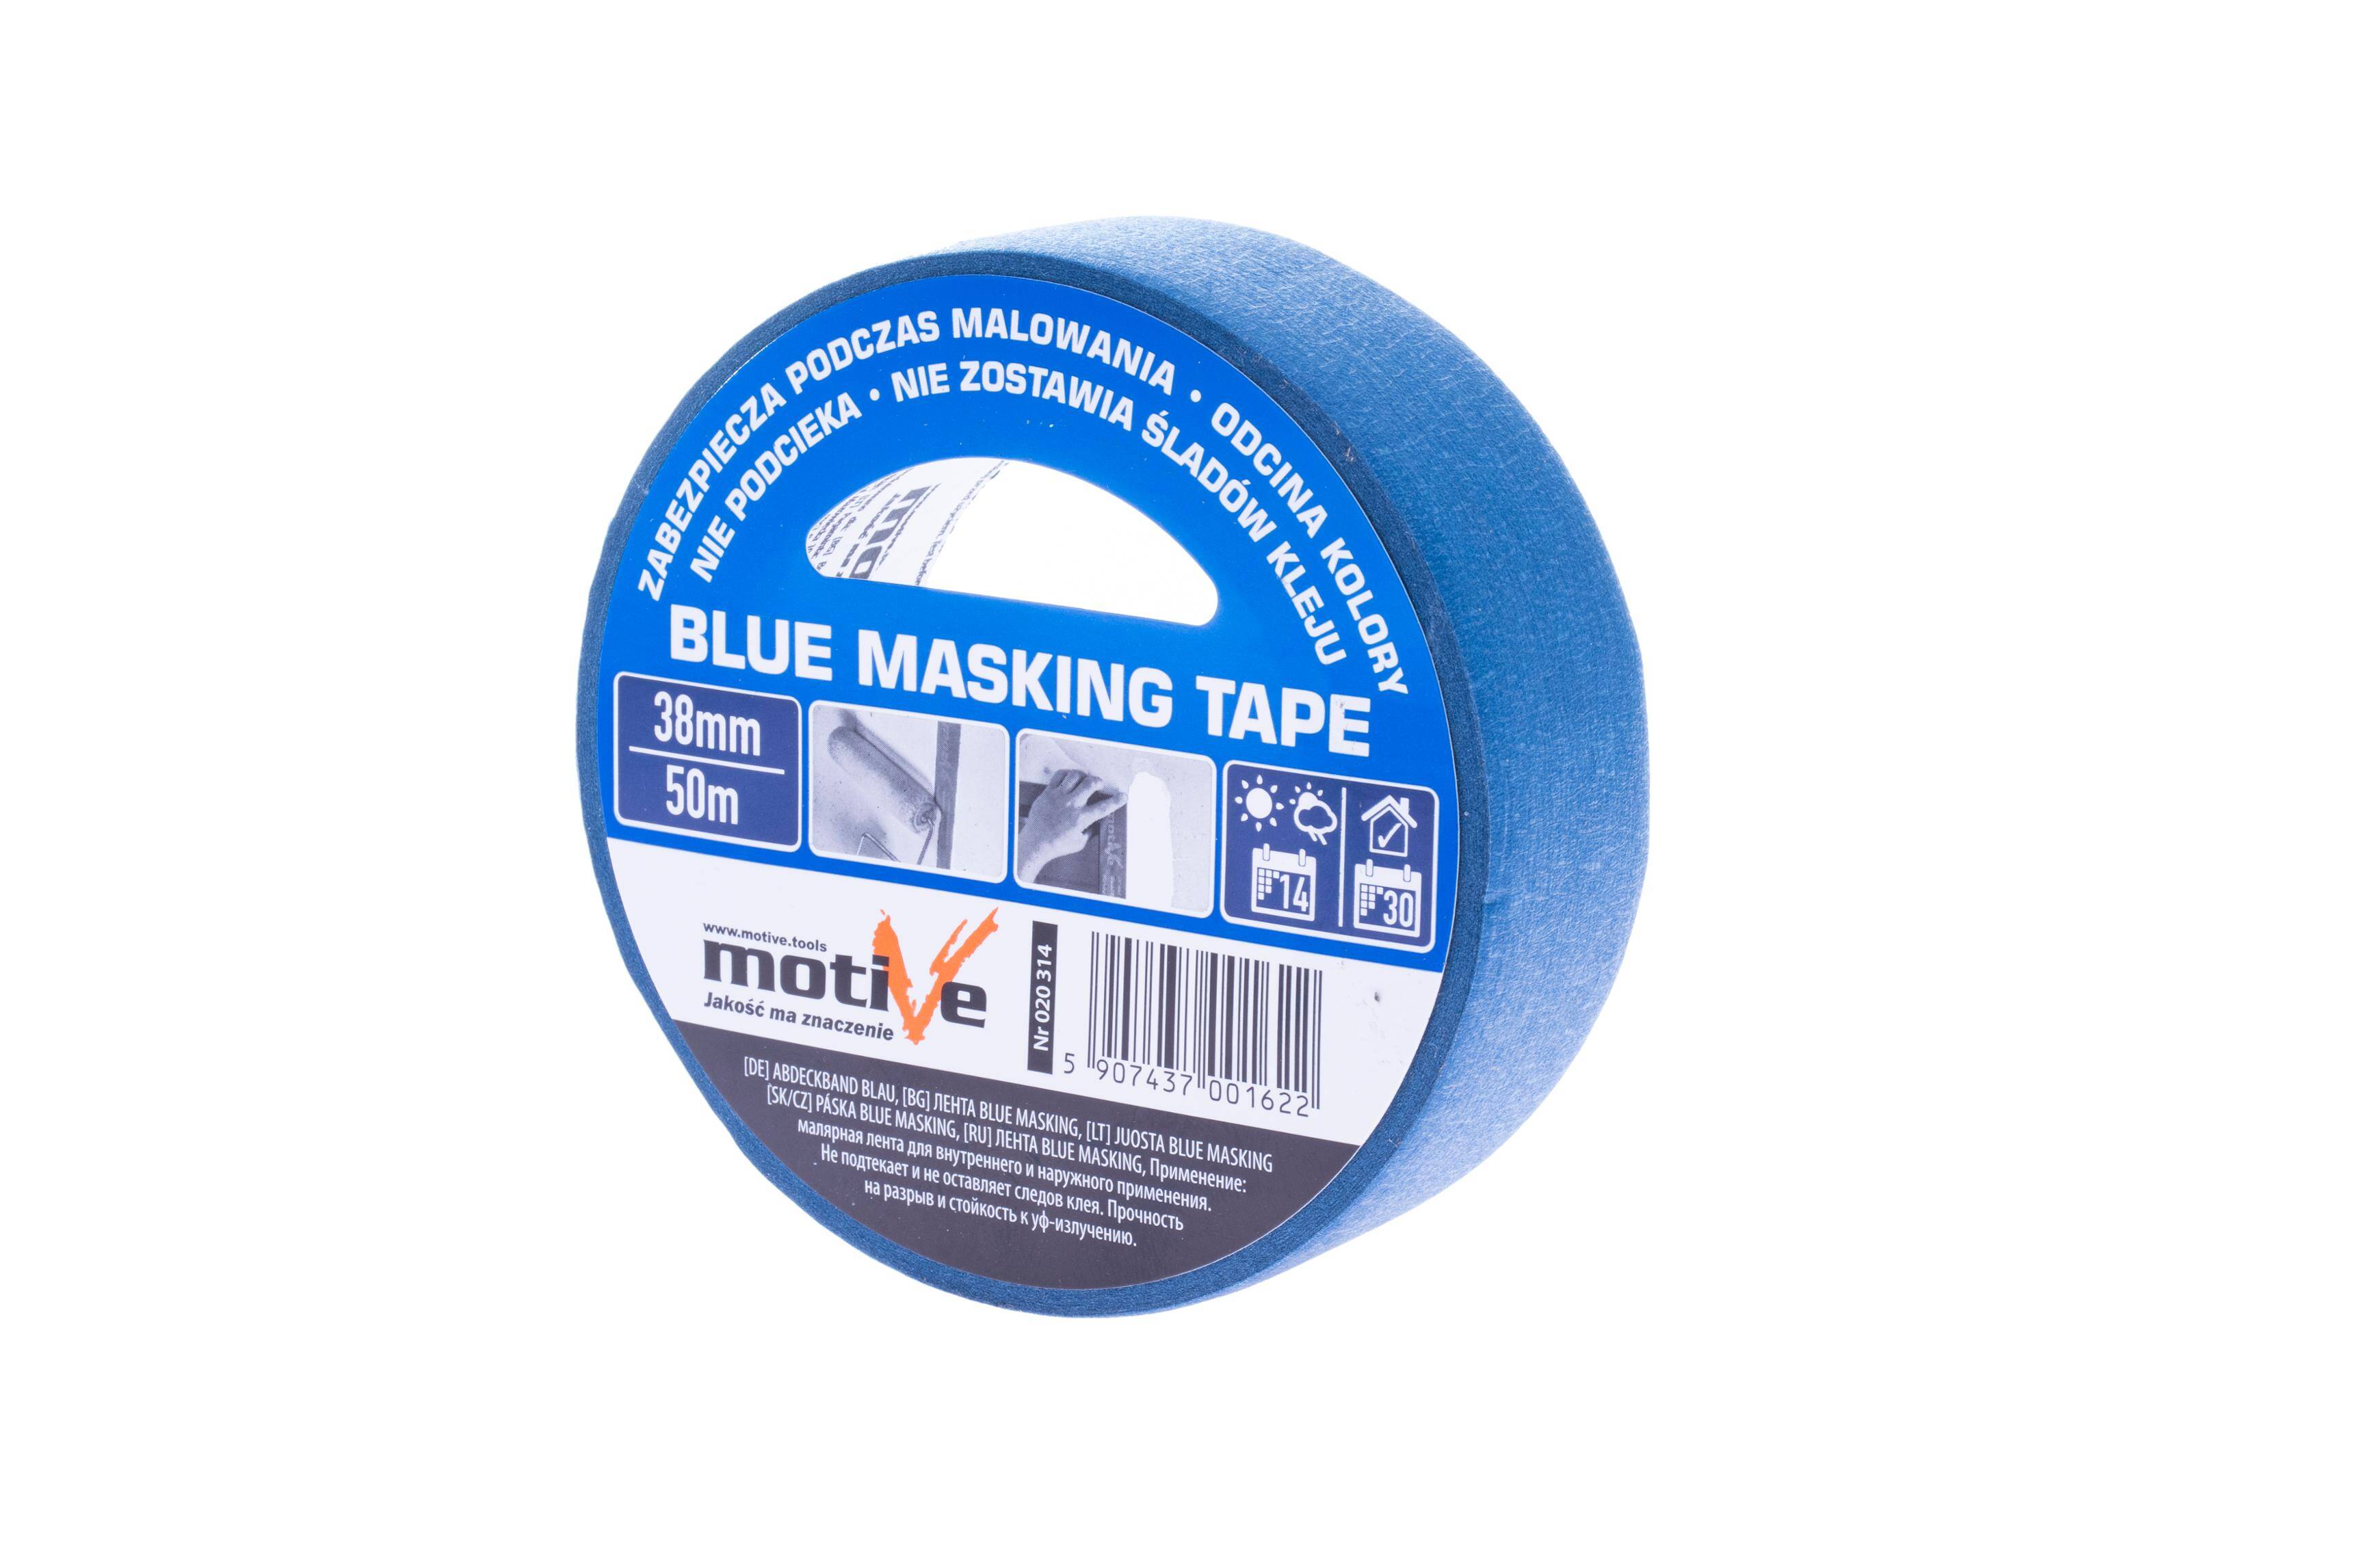 BLUE MASKING TAPE 38mm/50m MOTIVE